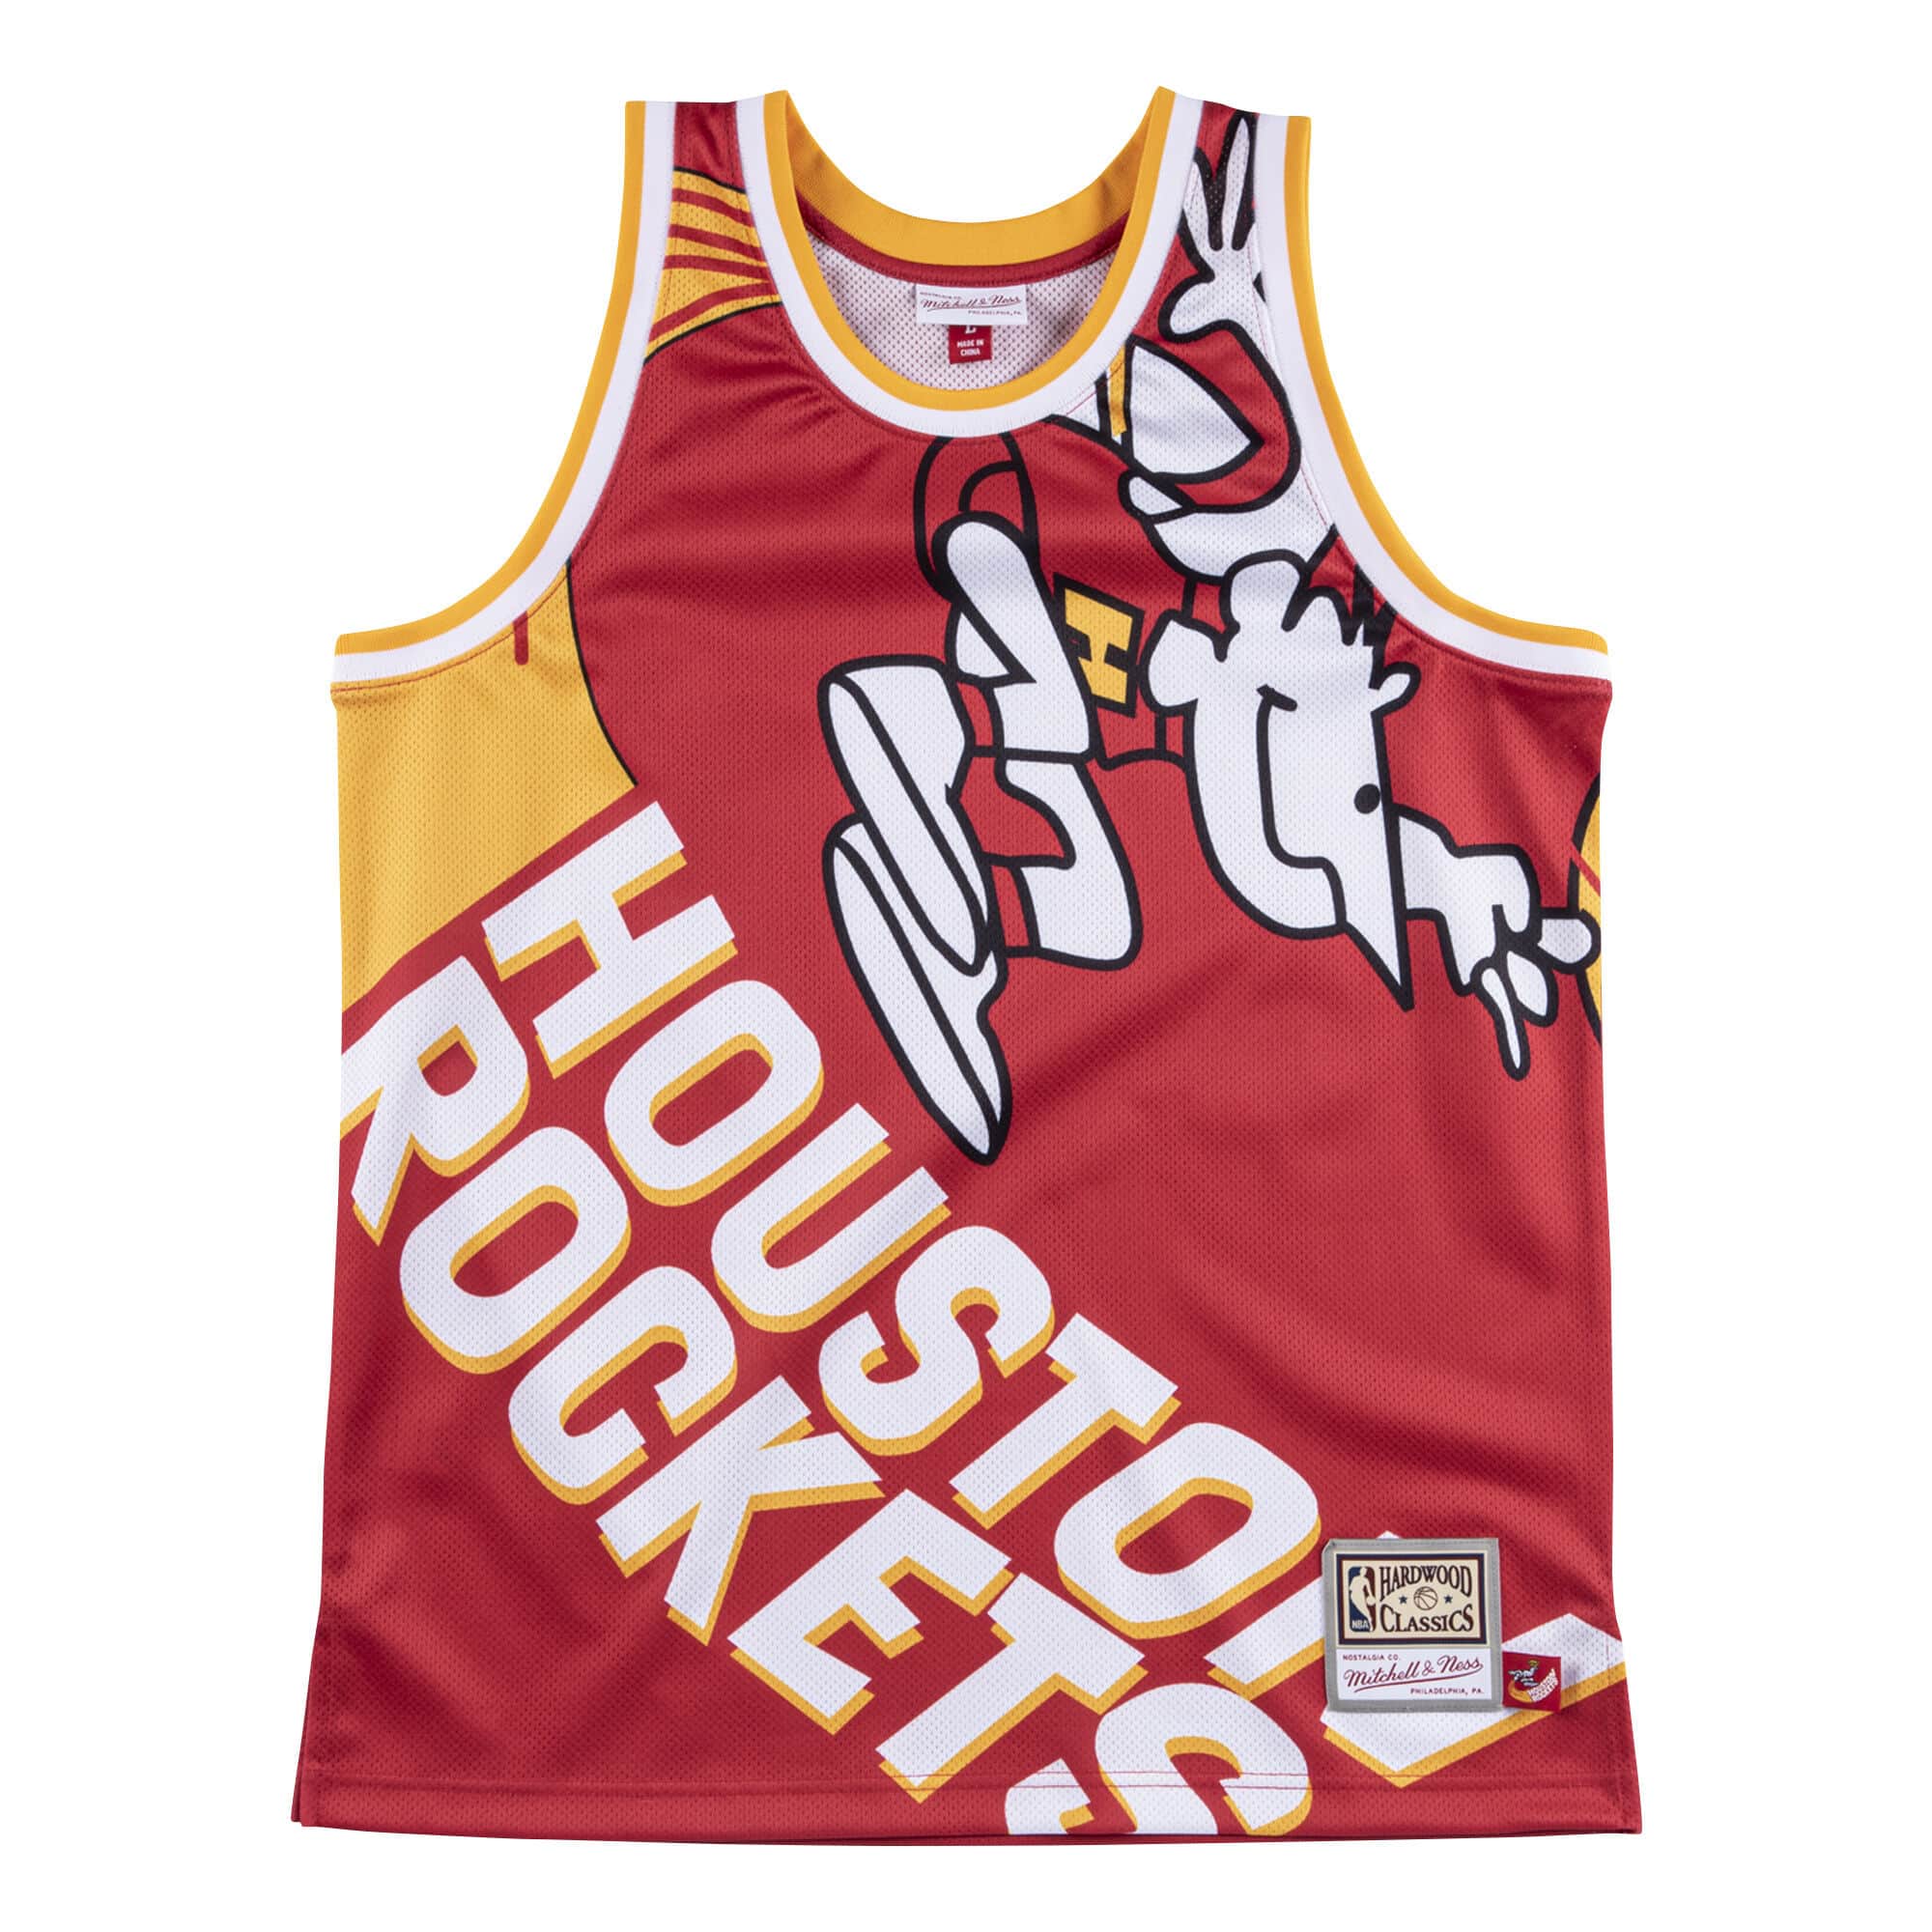 B2SS Houston Rockets NBA Tee Large